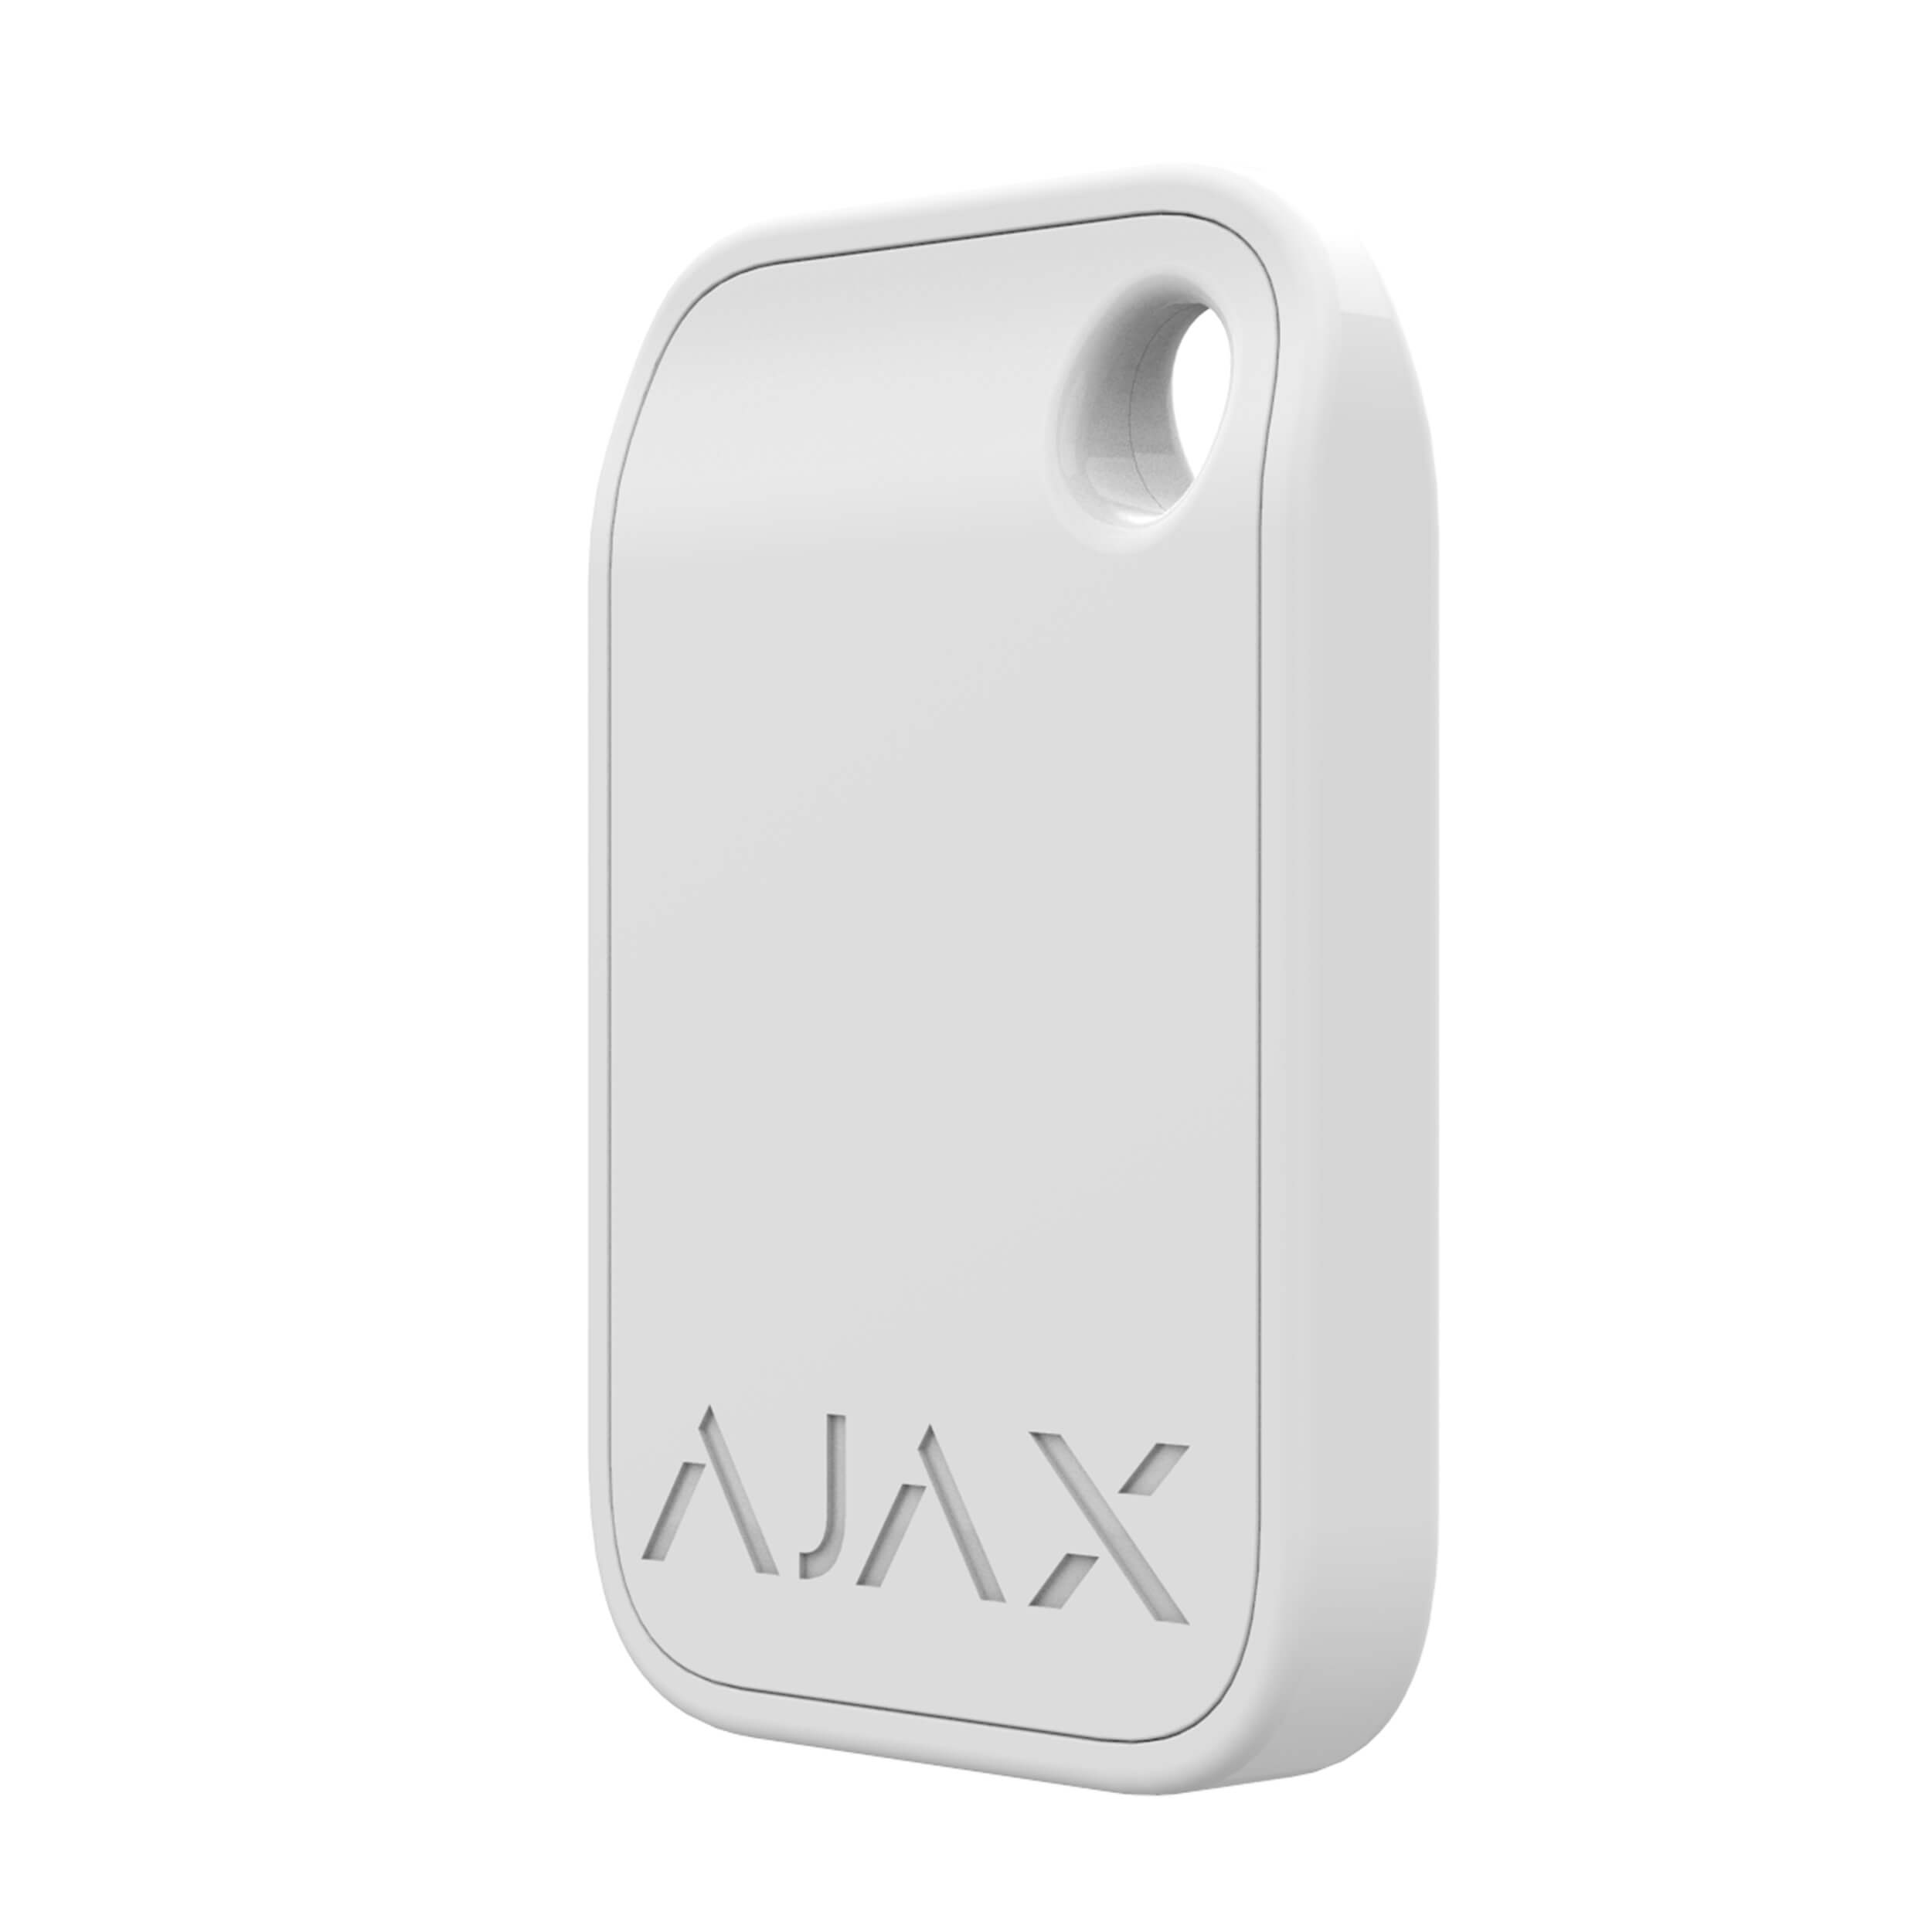 AJAX | Kontaktloser Schlüsselanhänger | Verschlüsselt | KeyPad Plus | Tag | Weiß